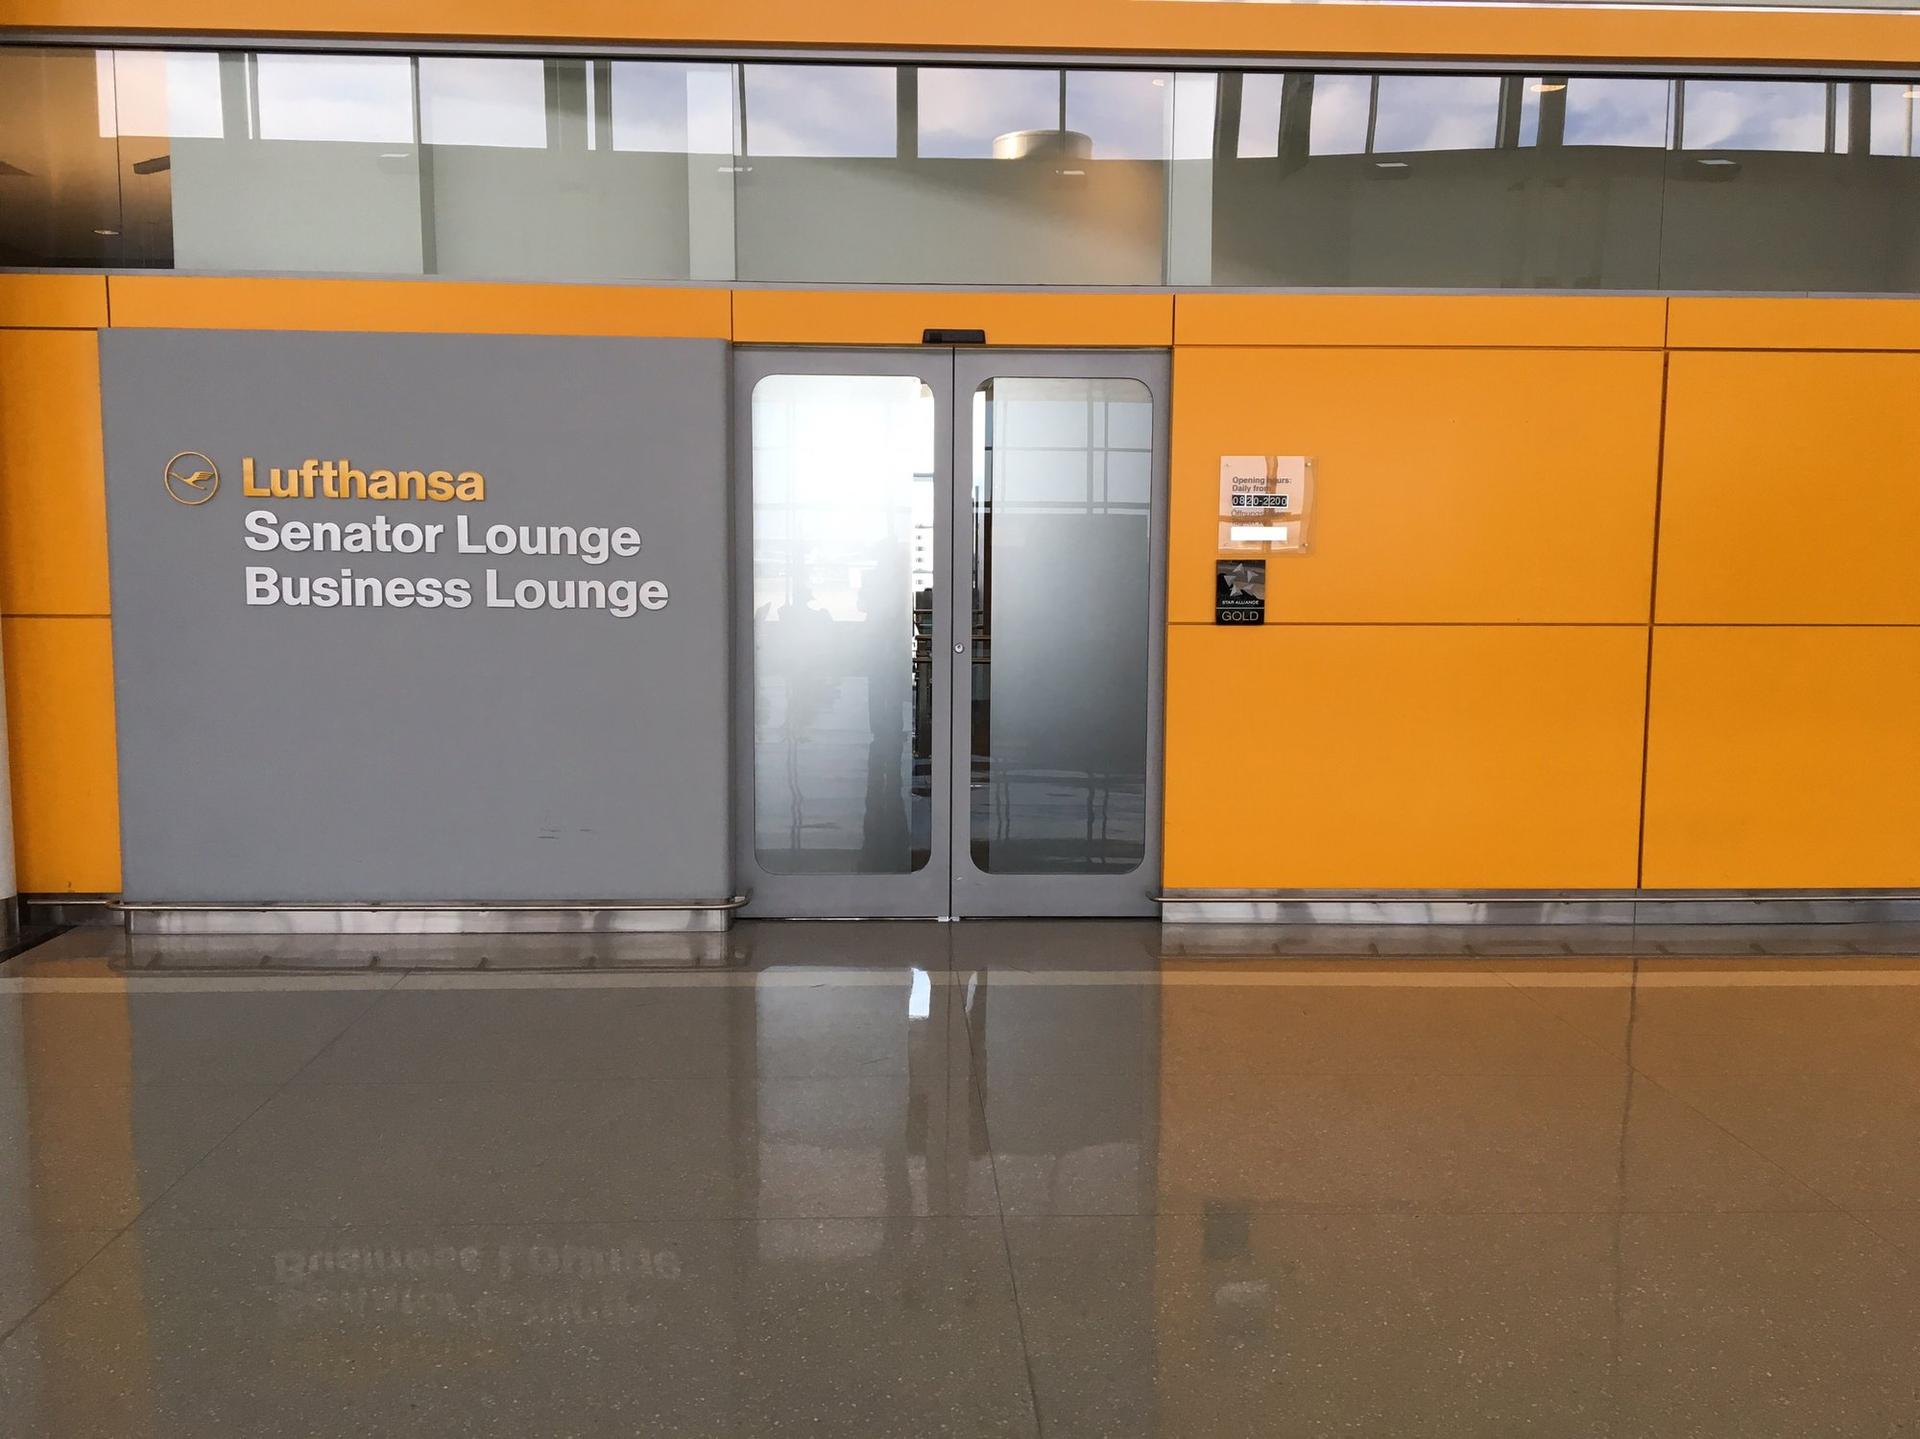 Lufthansa Business Lounge image 31 of 35